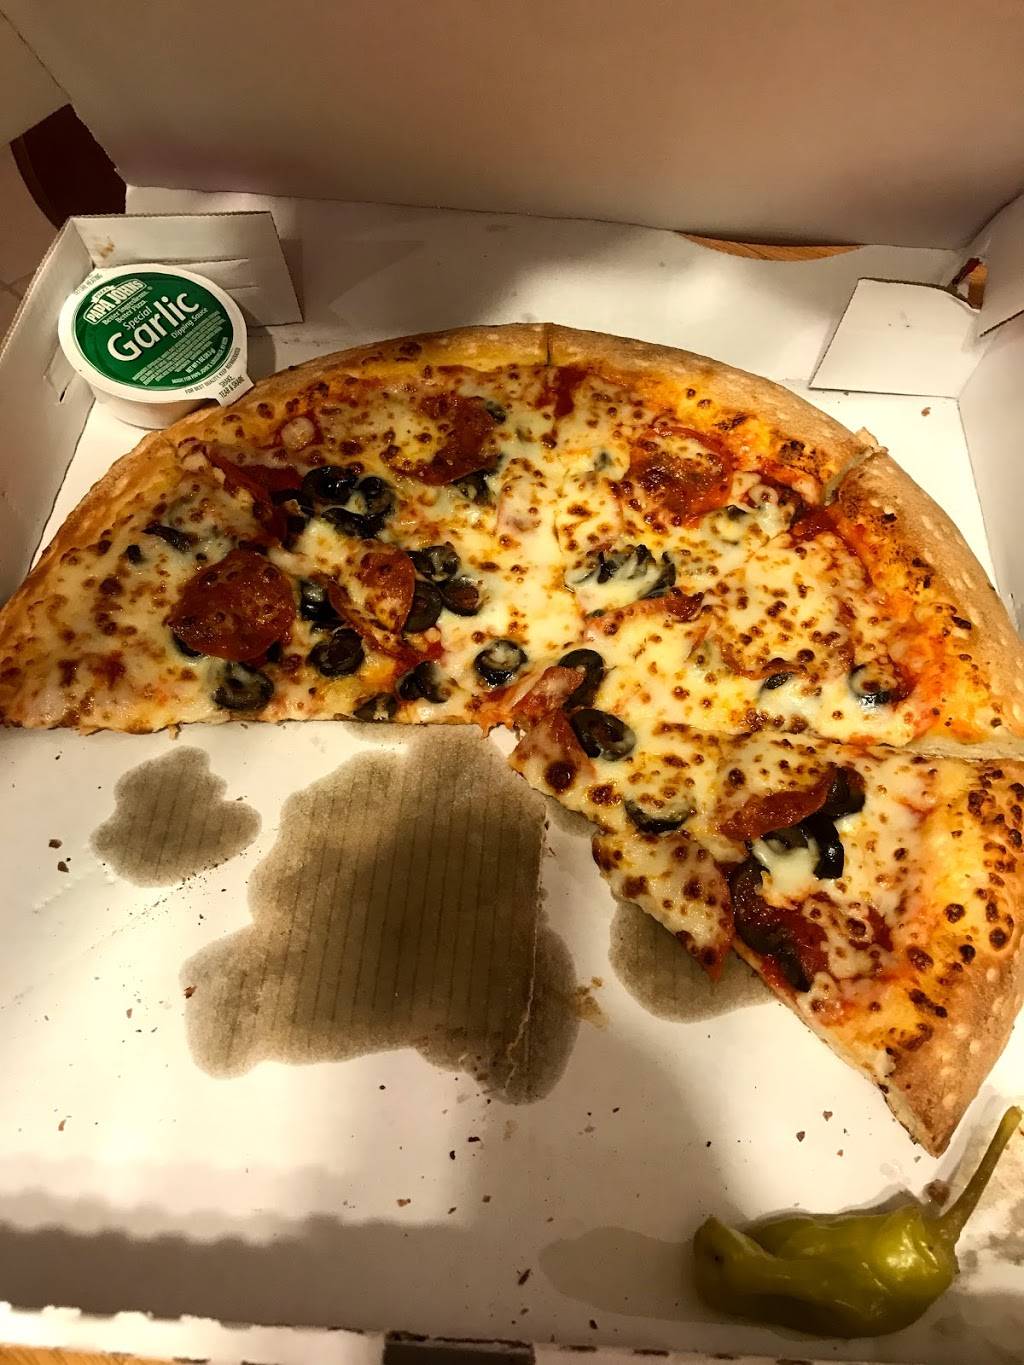 Papa Johns Pizza | restaurant | 721 Anderson Ave, Cliffside Park, NJ 07010, USA | 2019437272 OR +1 201-943-7272